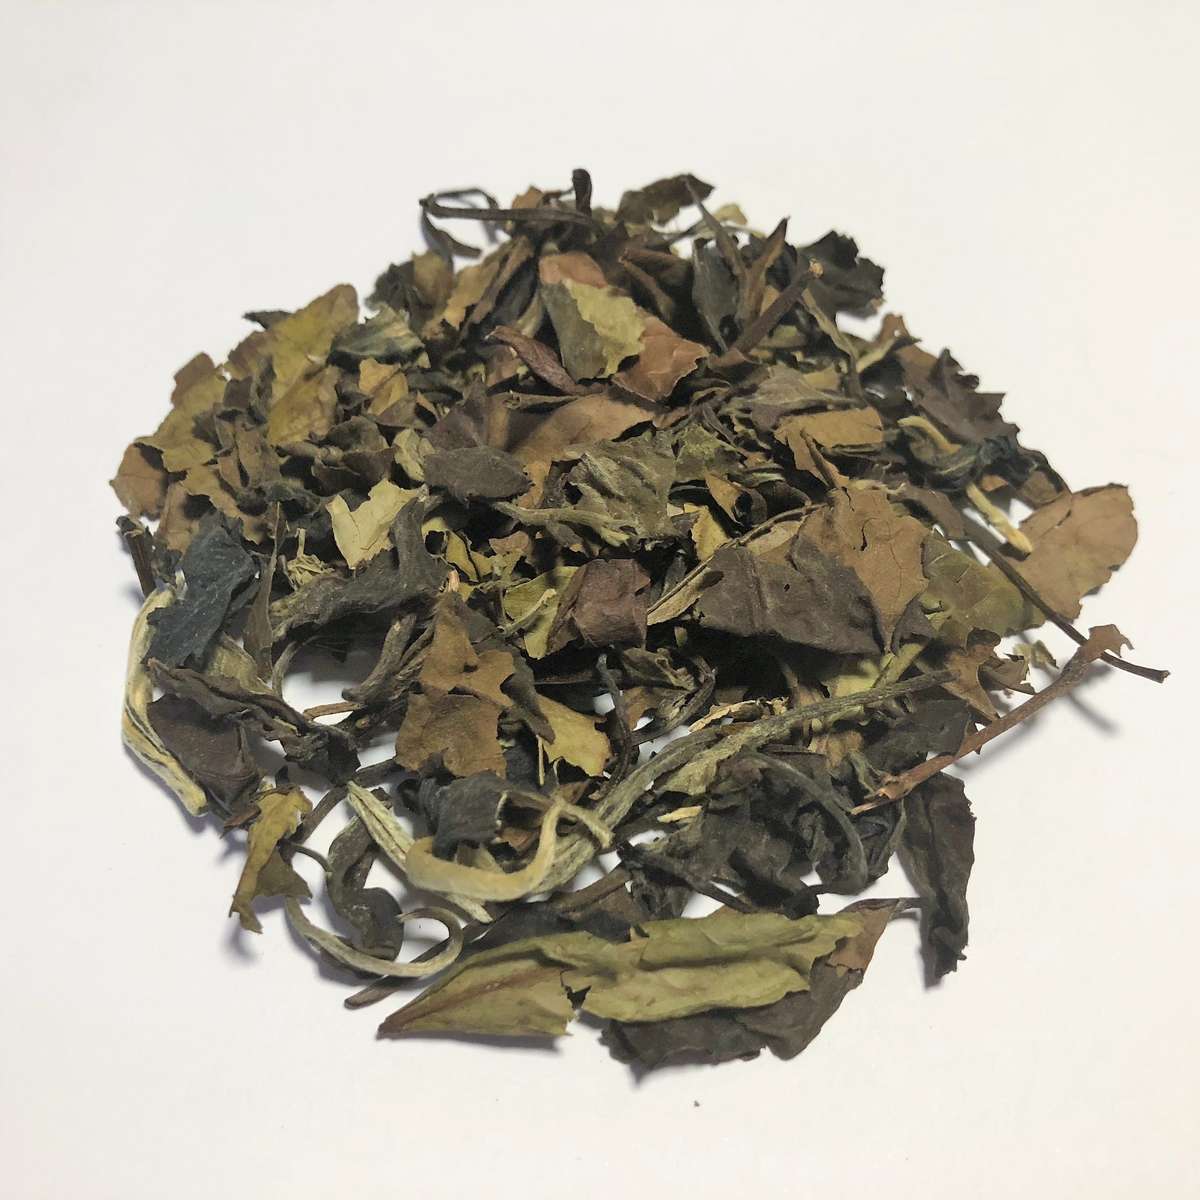 White French Mint - Loose Leaf Tea